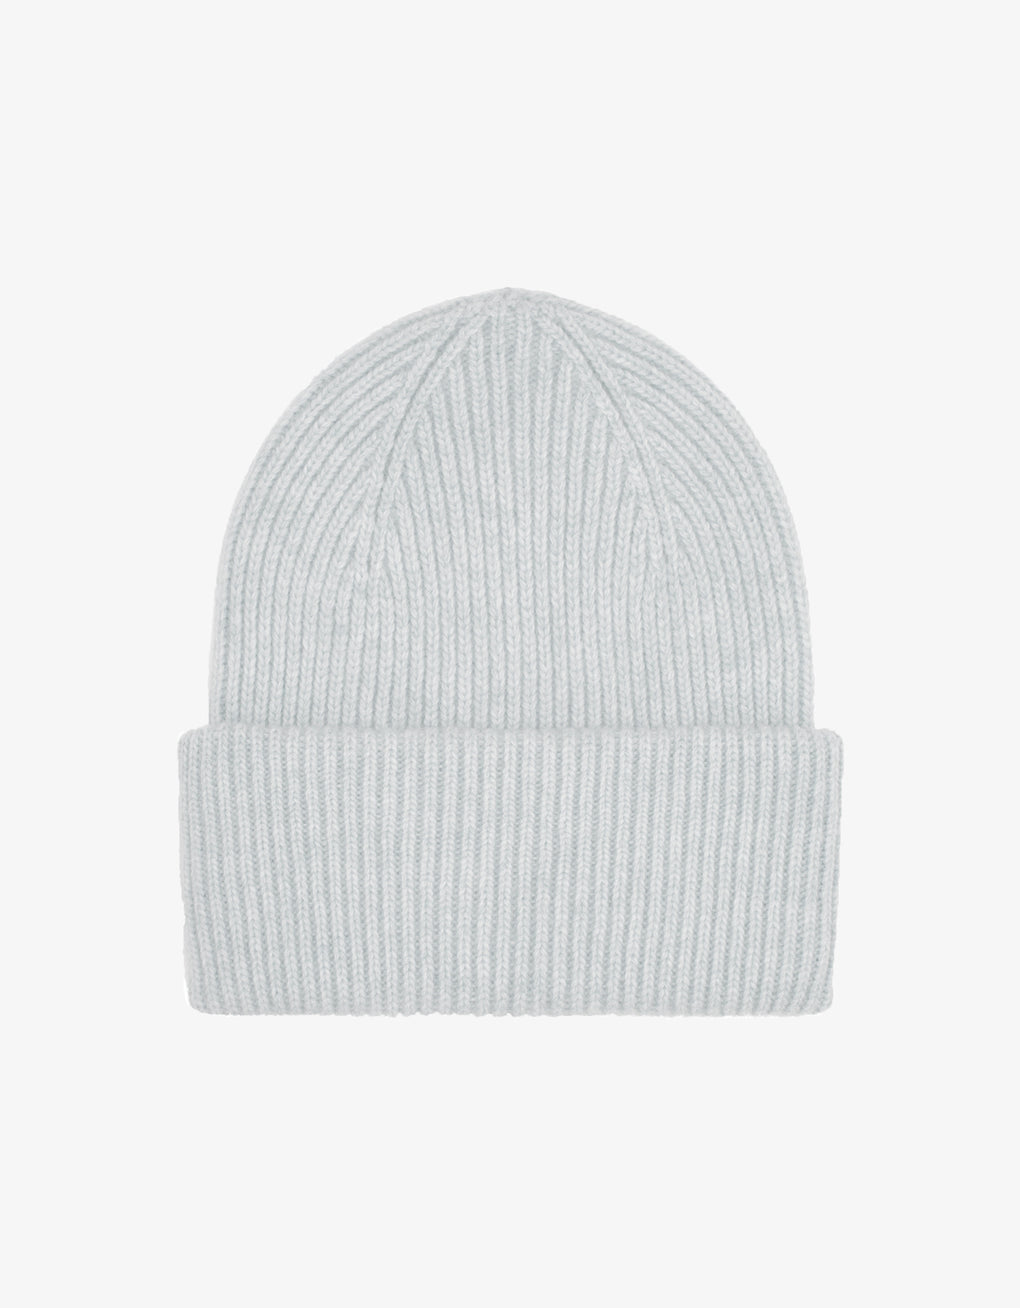 Merino wool hat - limestone grey